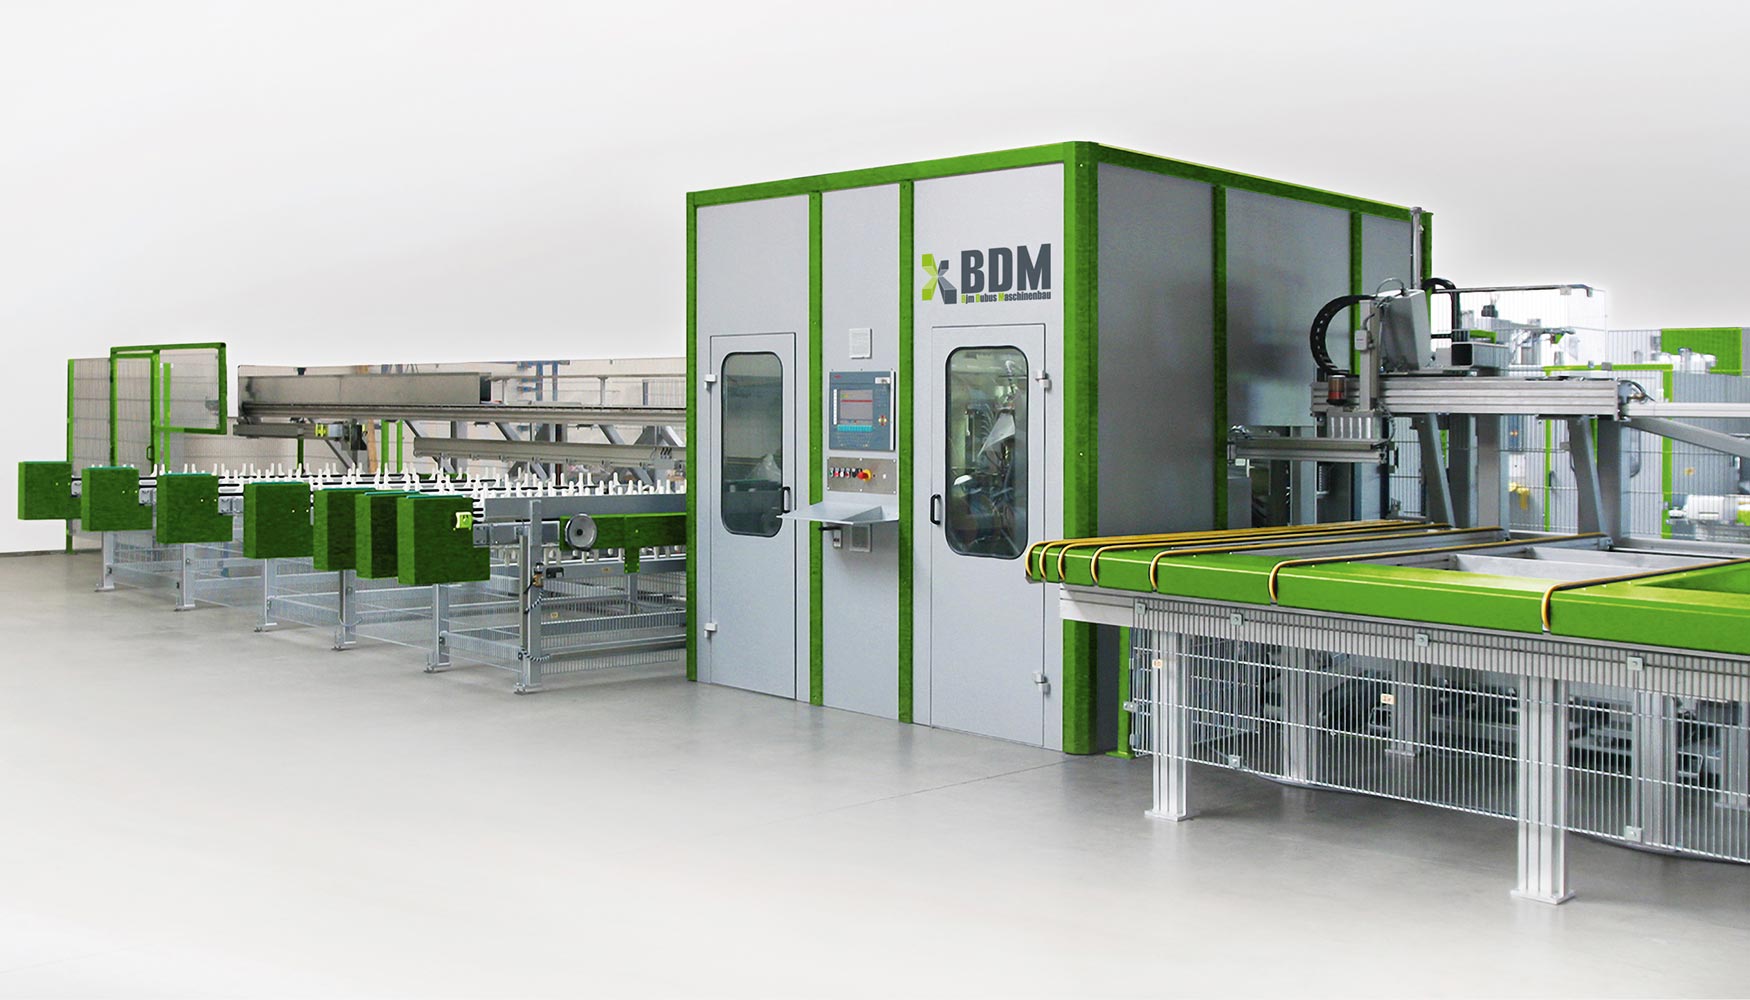 Centro modular de corte de mecanizado BDM